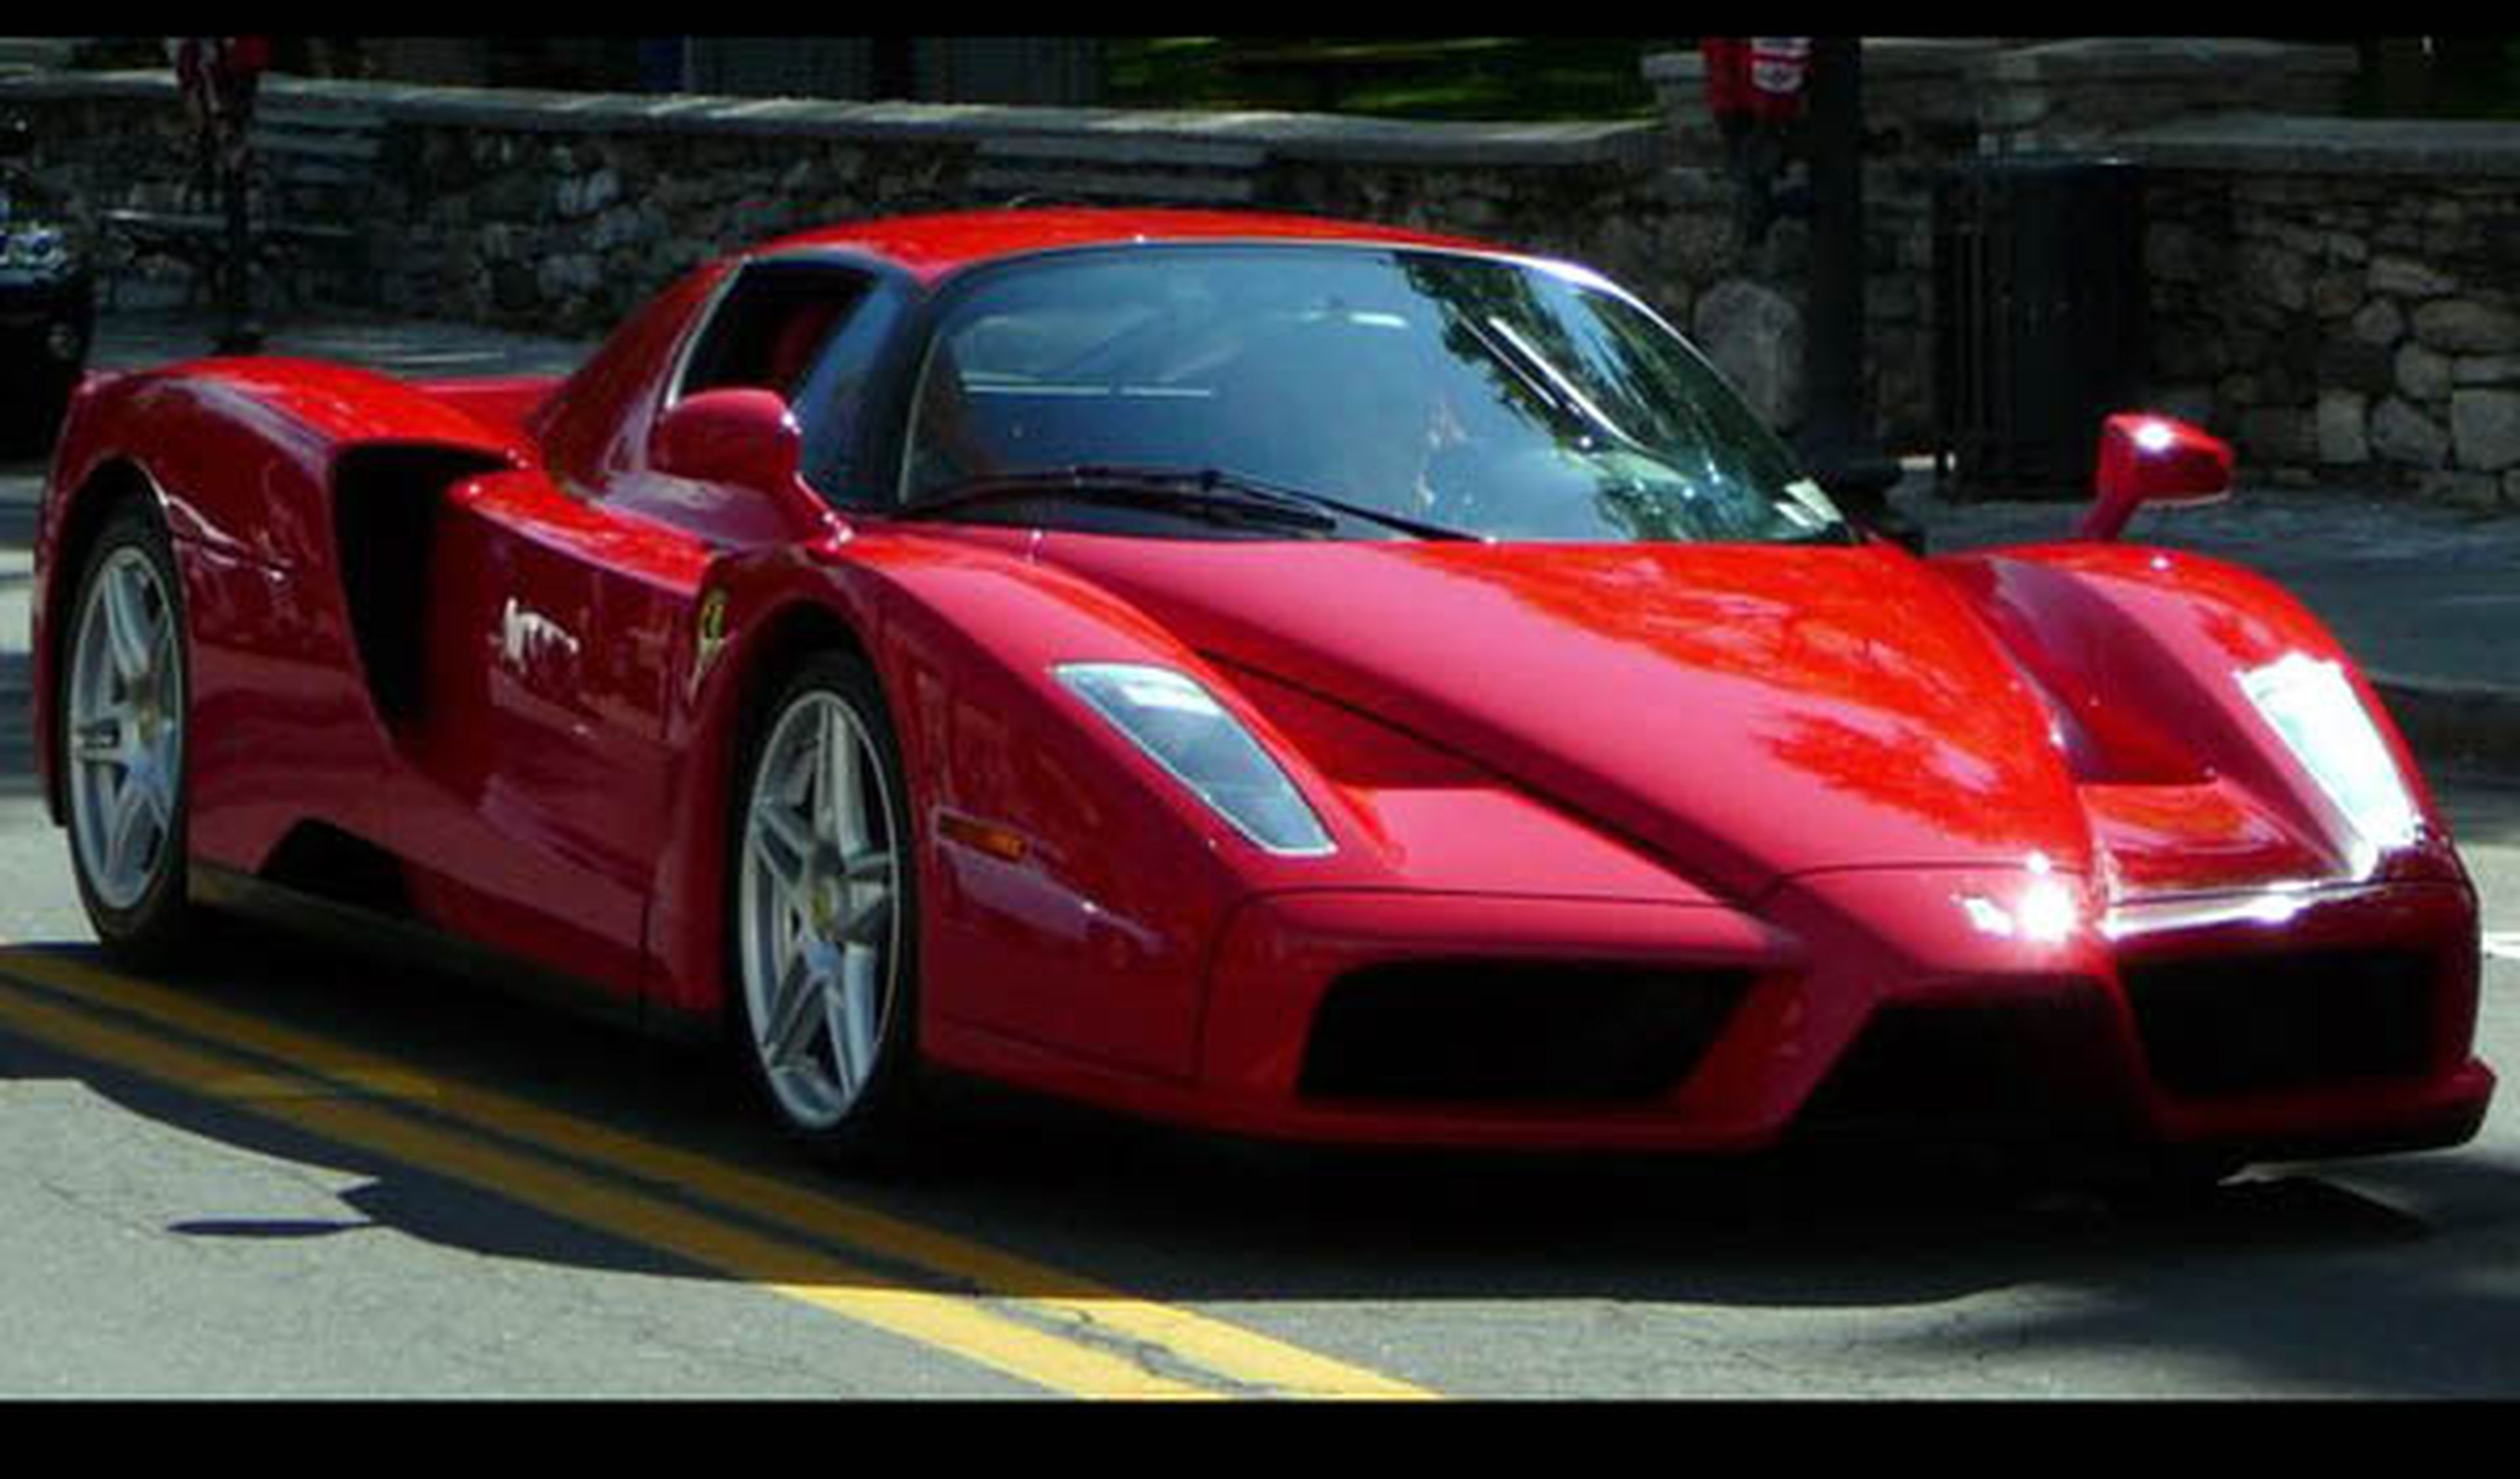 Dos empleados de un concesionario estrellan un Ferrari Enzo